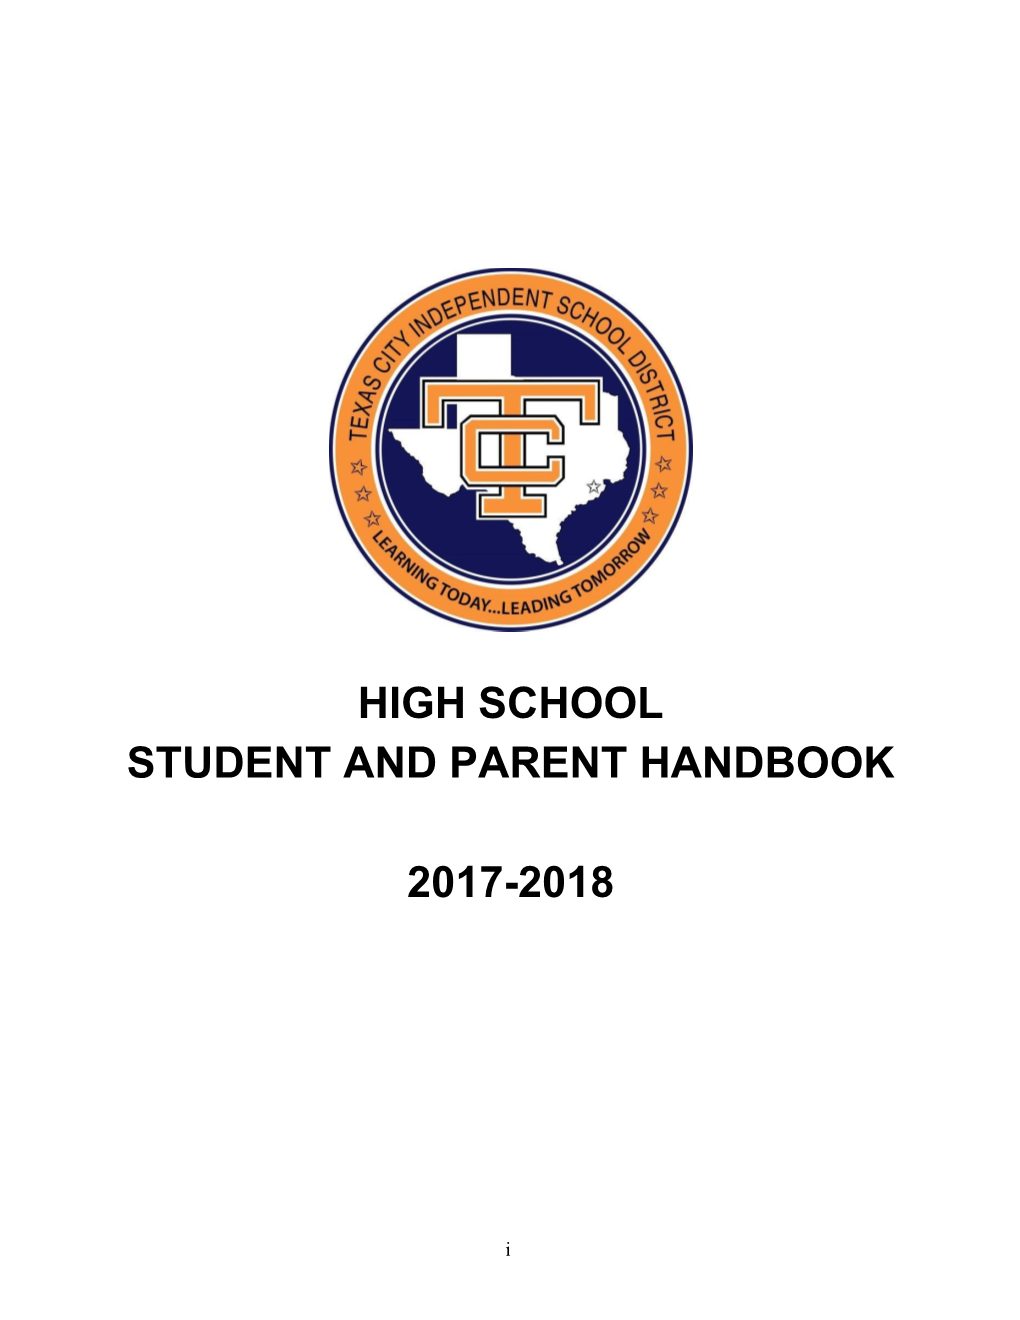 High School Student and Parent Handbook 2017-2018